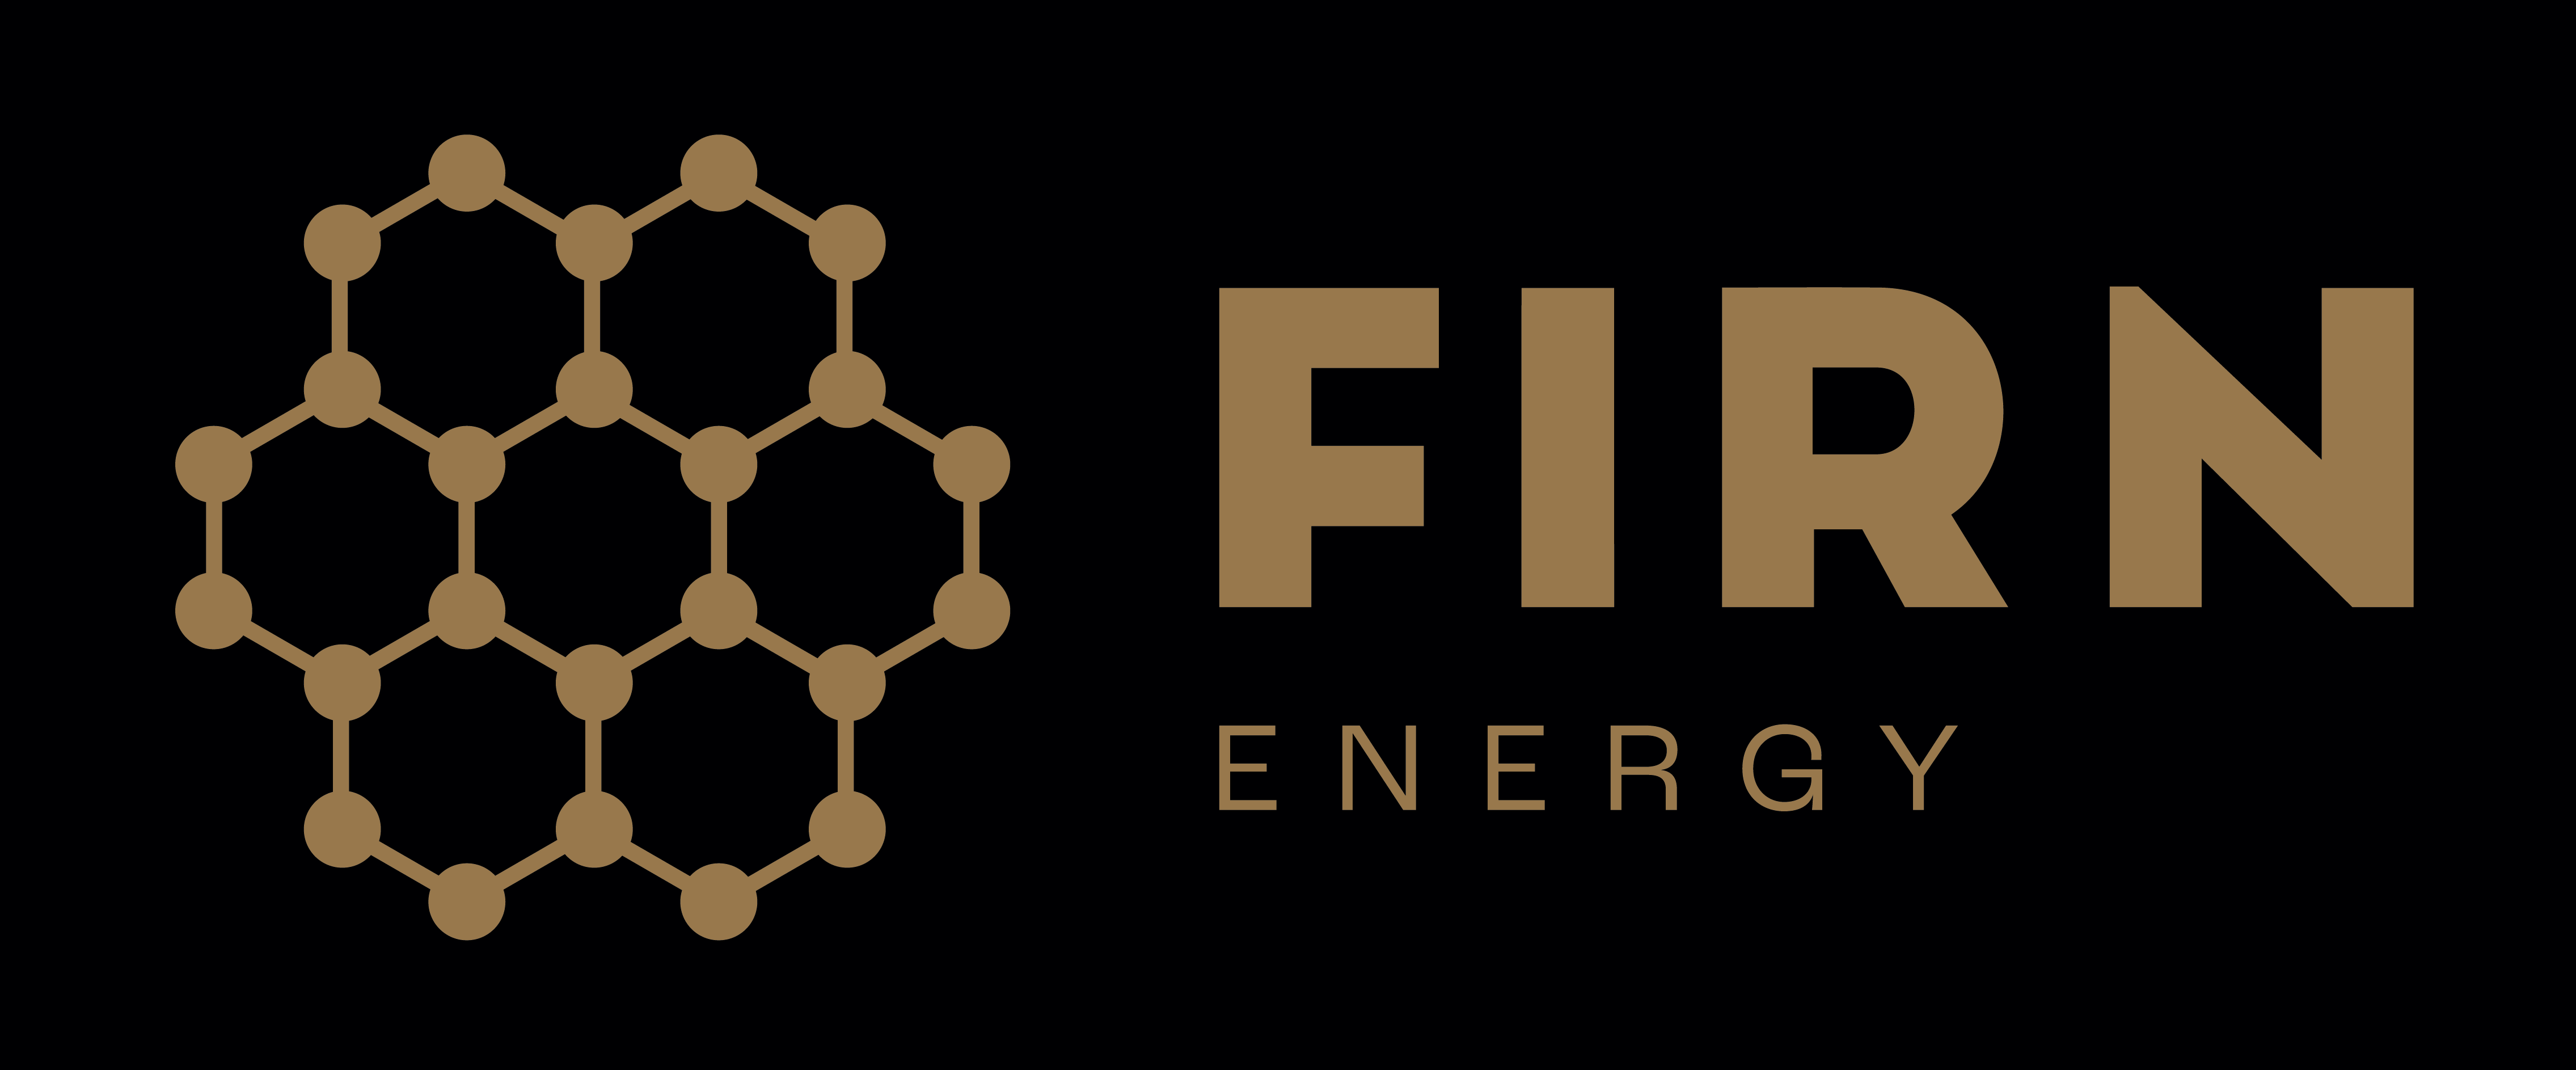 FIRN Energy